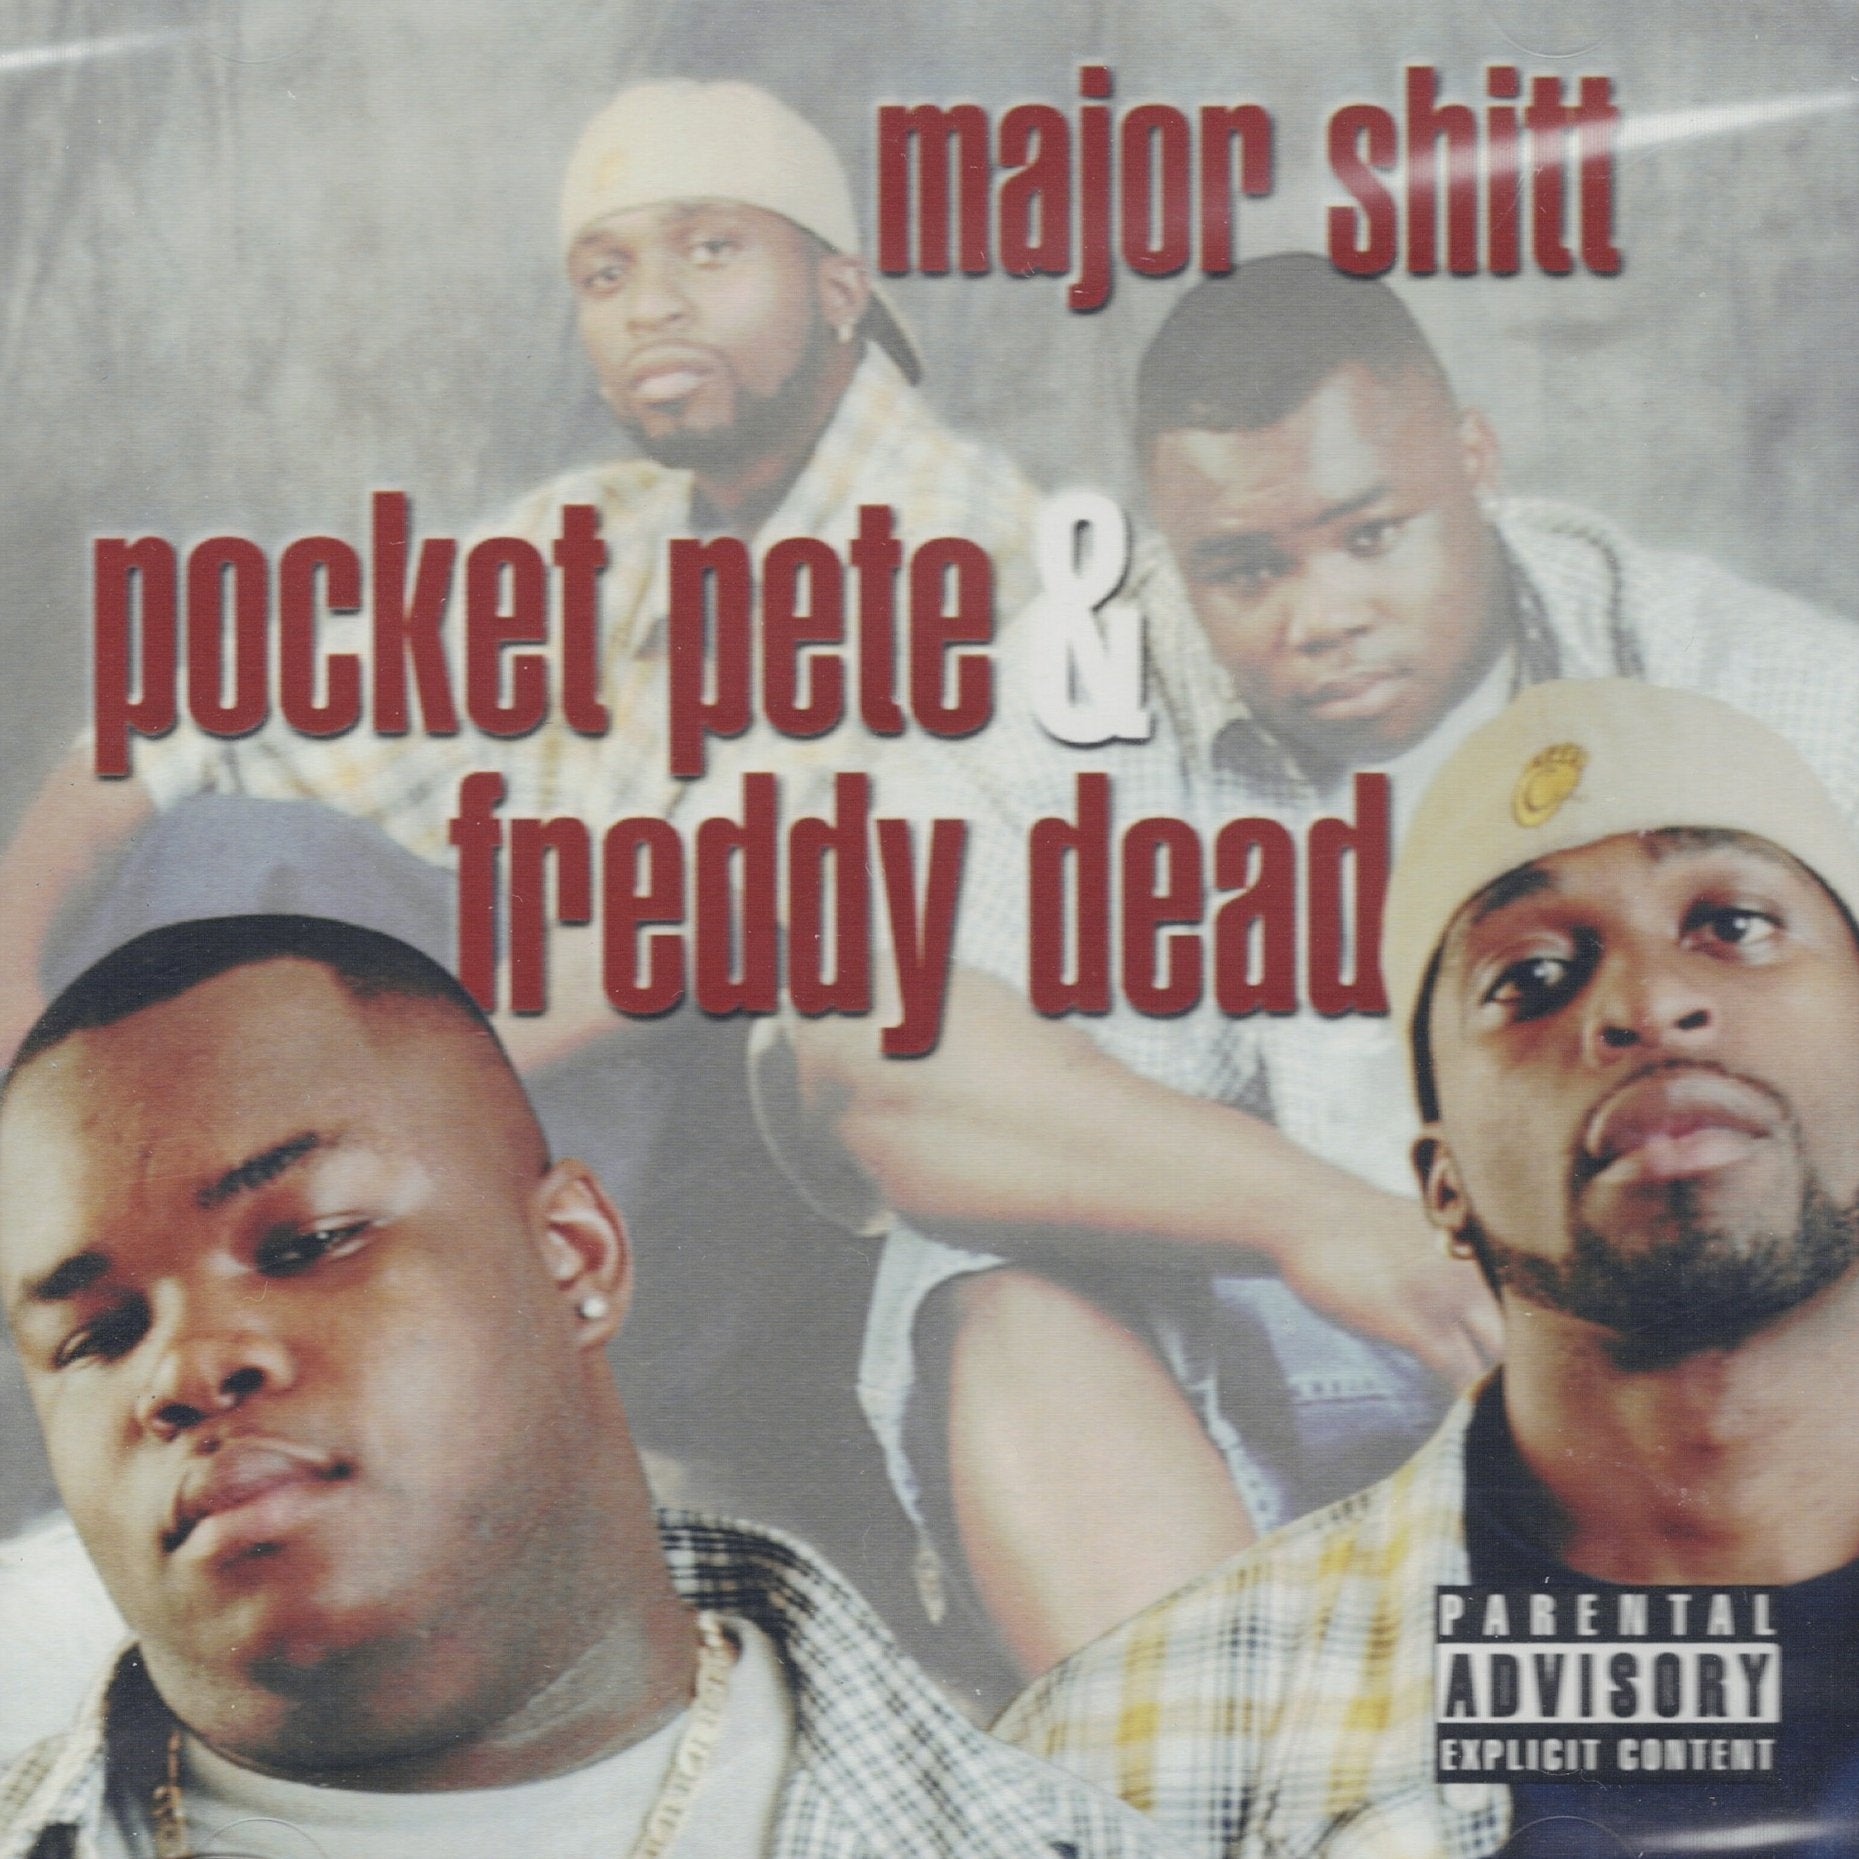 Pocket_Pete_Freddy_Dead_Major_Shitt